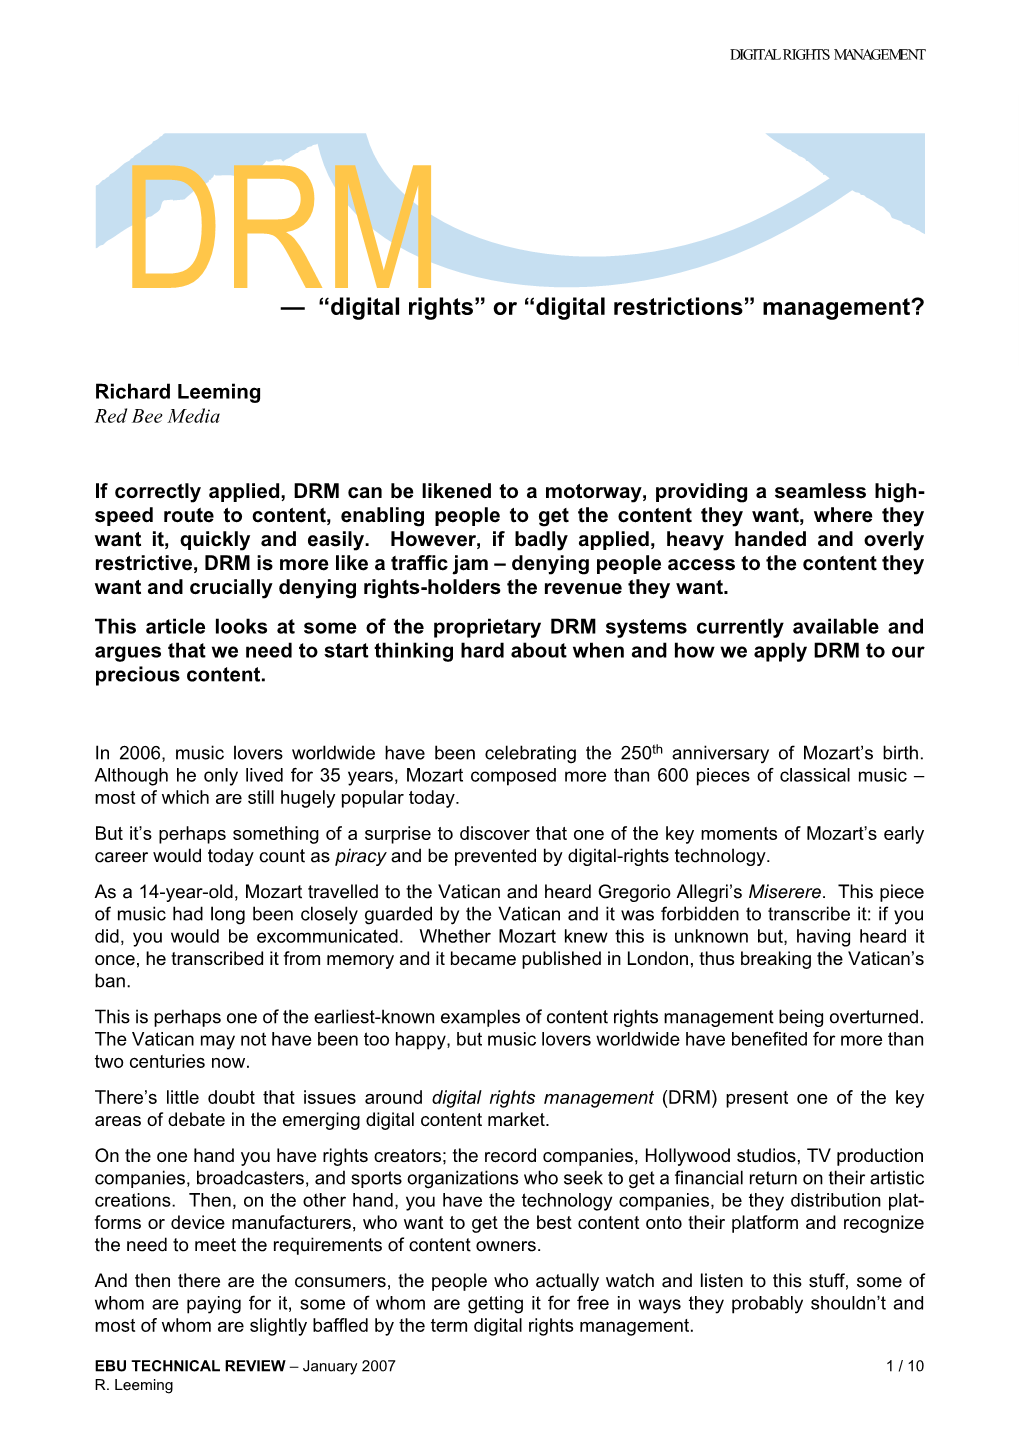 DRM — “Digital Rights” Or “Digital Restrictions” Management?